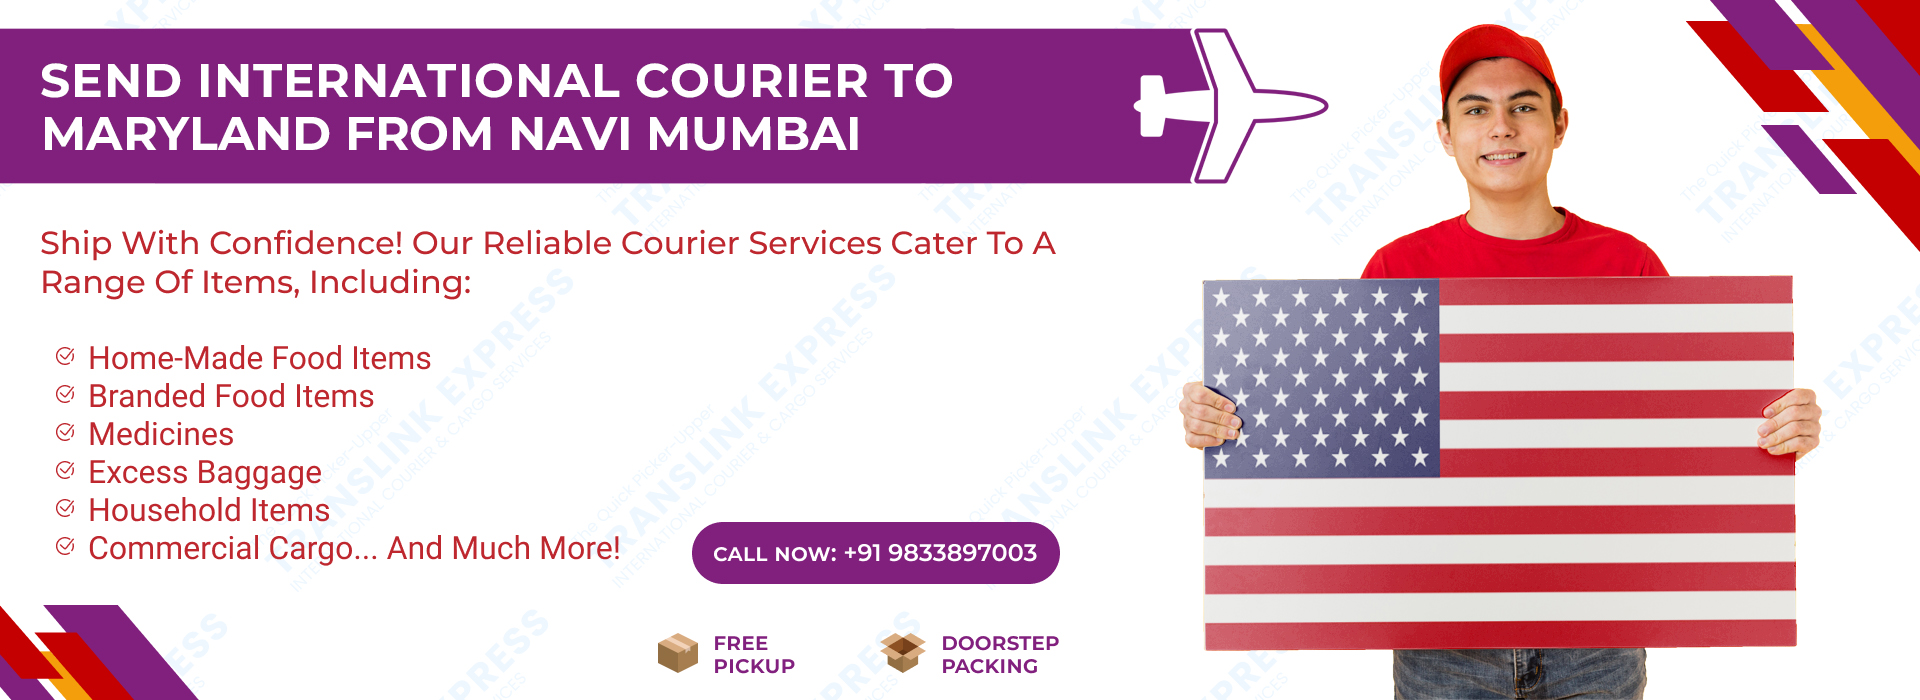 Courier to Maryland From Navi Mumbai